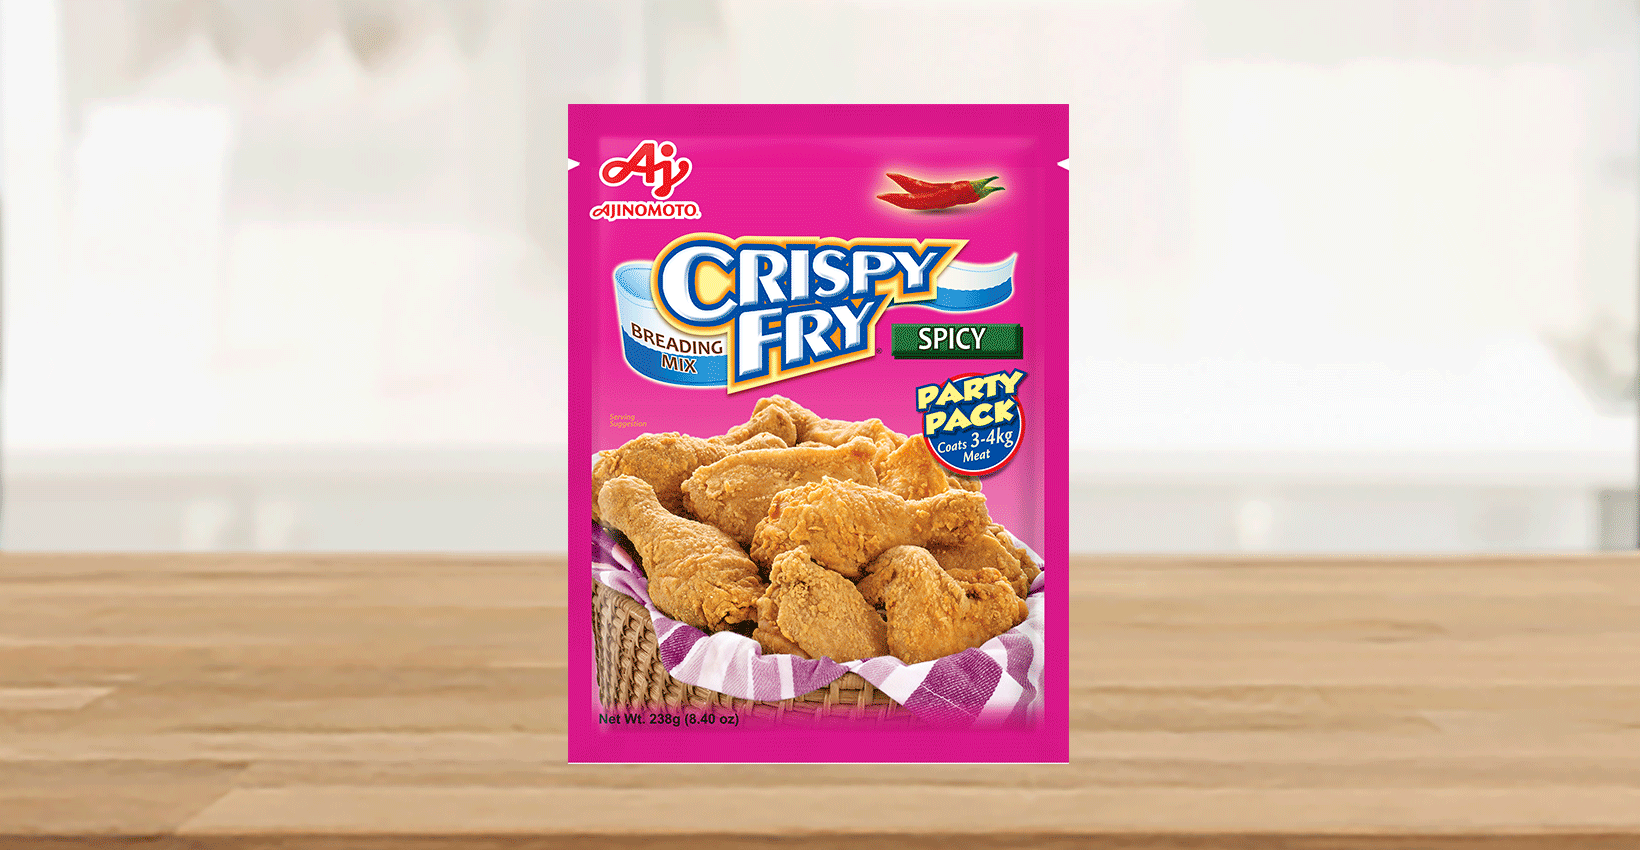 Crispy Fry Spicy 238g